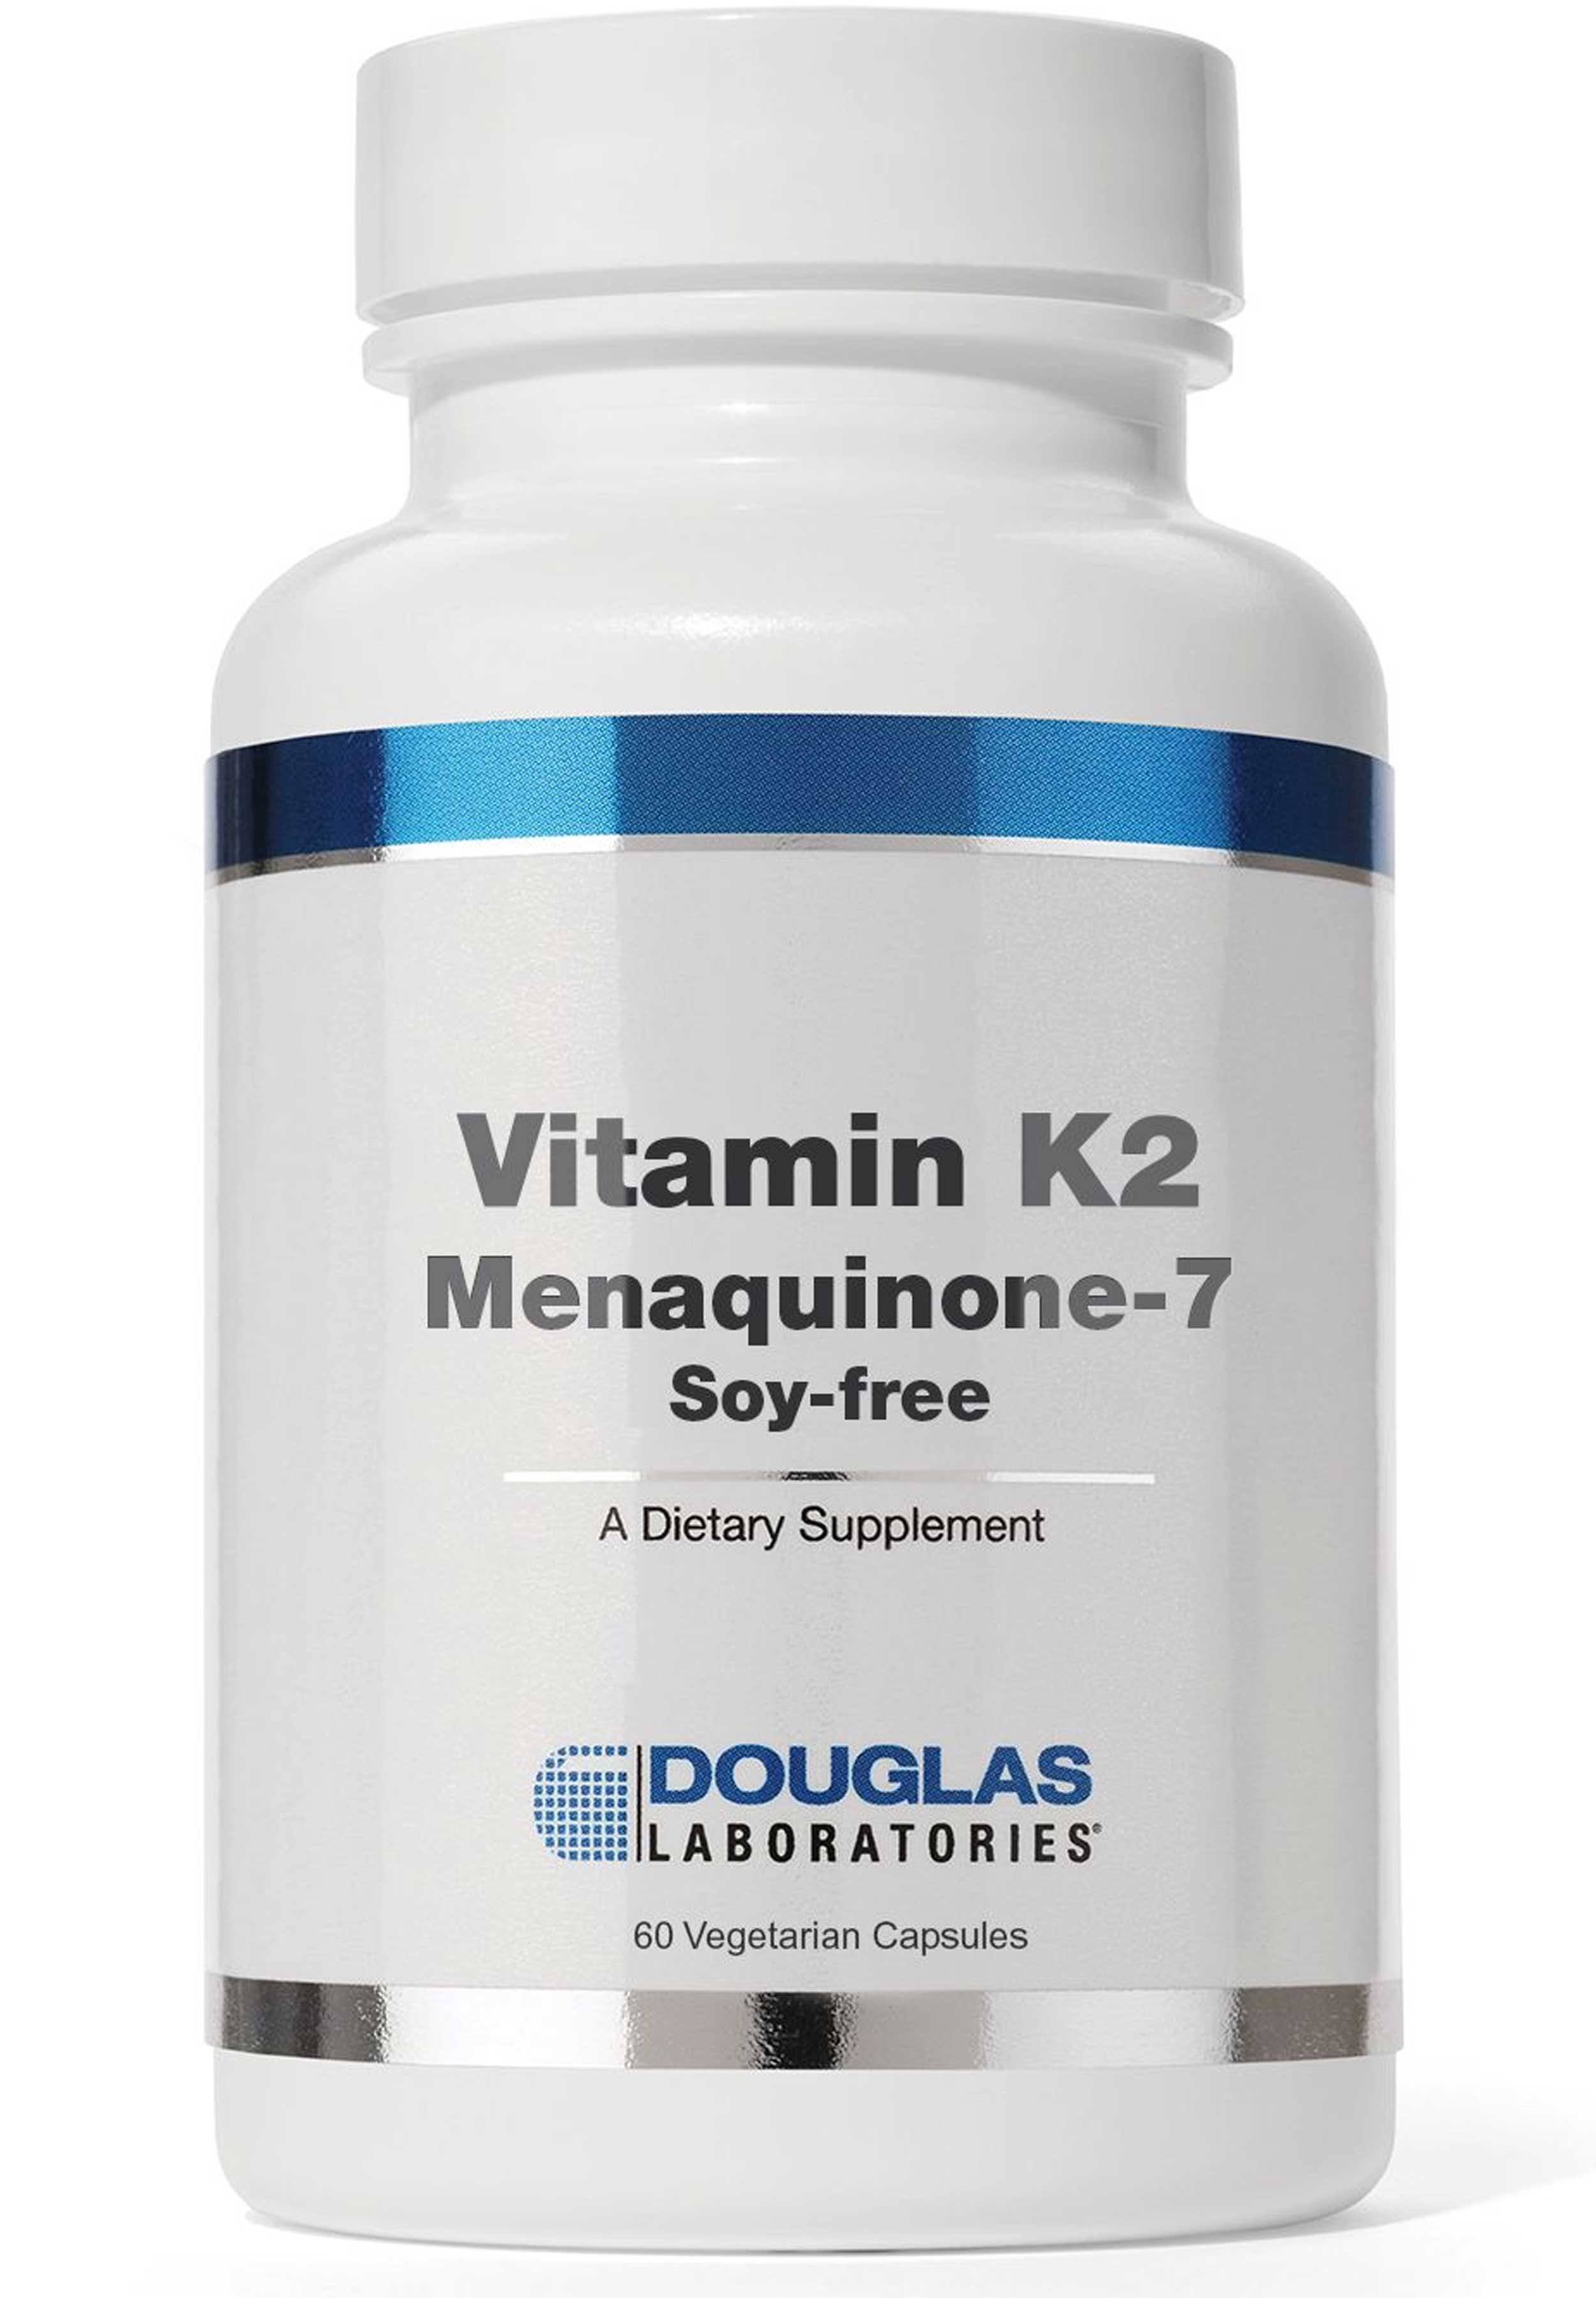 Vitamin K2 Menaquinone-7 - Douglas Laboratories 60 Capsules